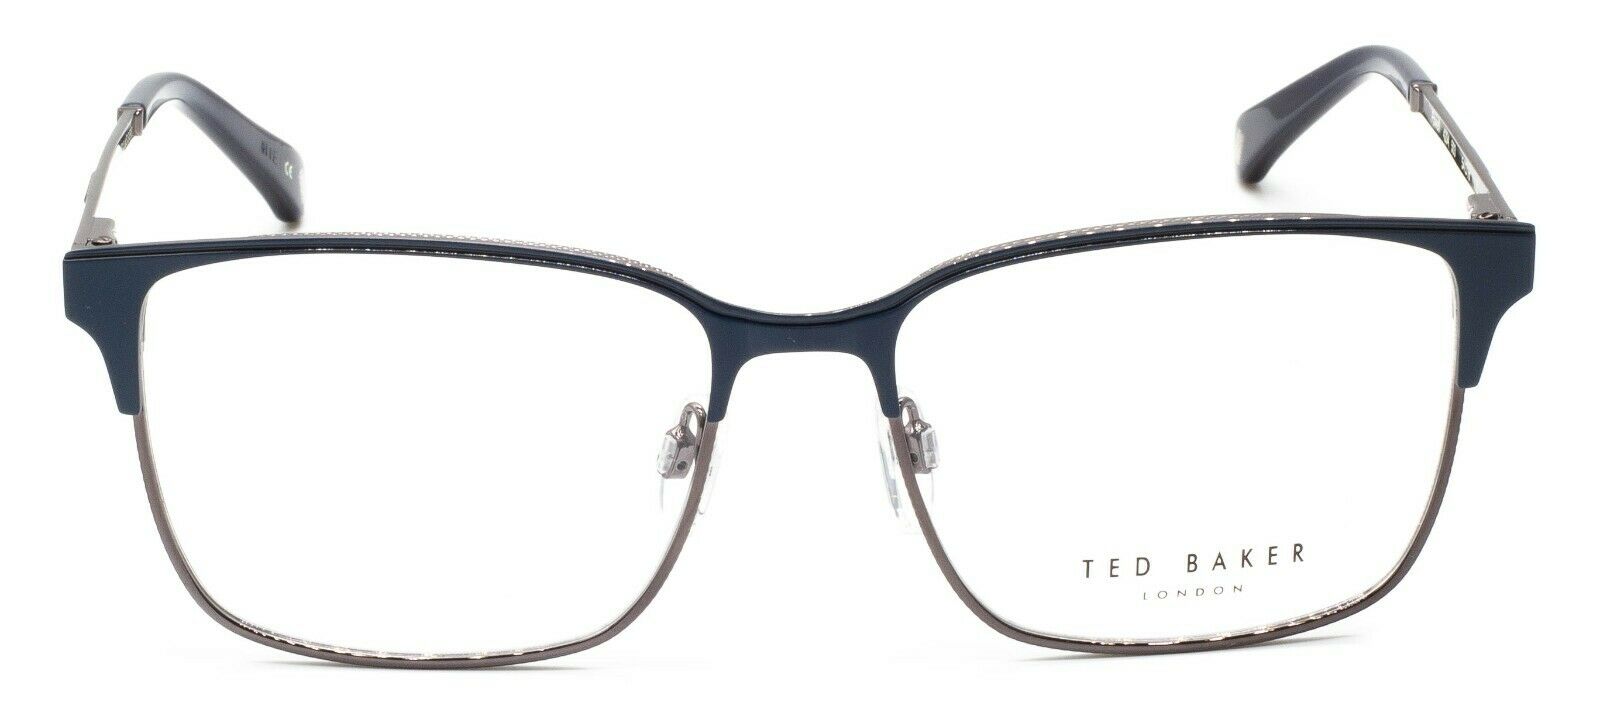 TED BAKER 4294 503 Powell 54mm Eyewear FRAMES Glasses Eyeglasses RX Optical New